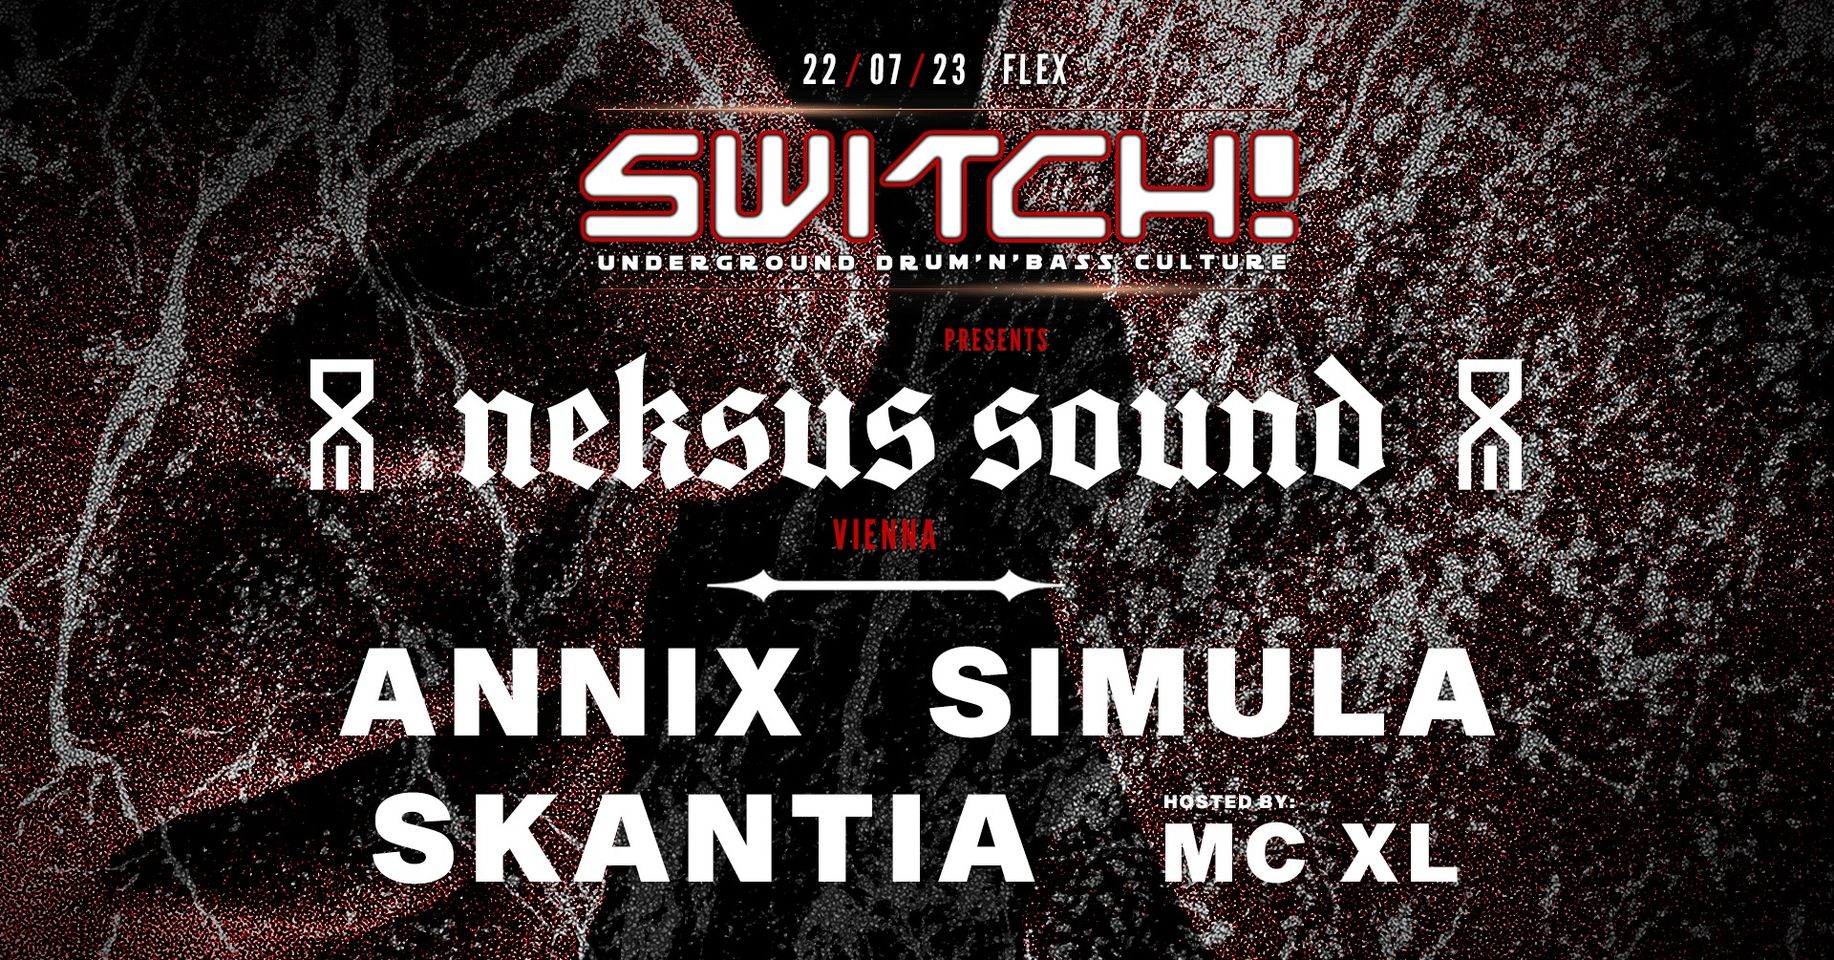 Switch! am 22. July 2023 @ Flex.